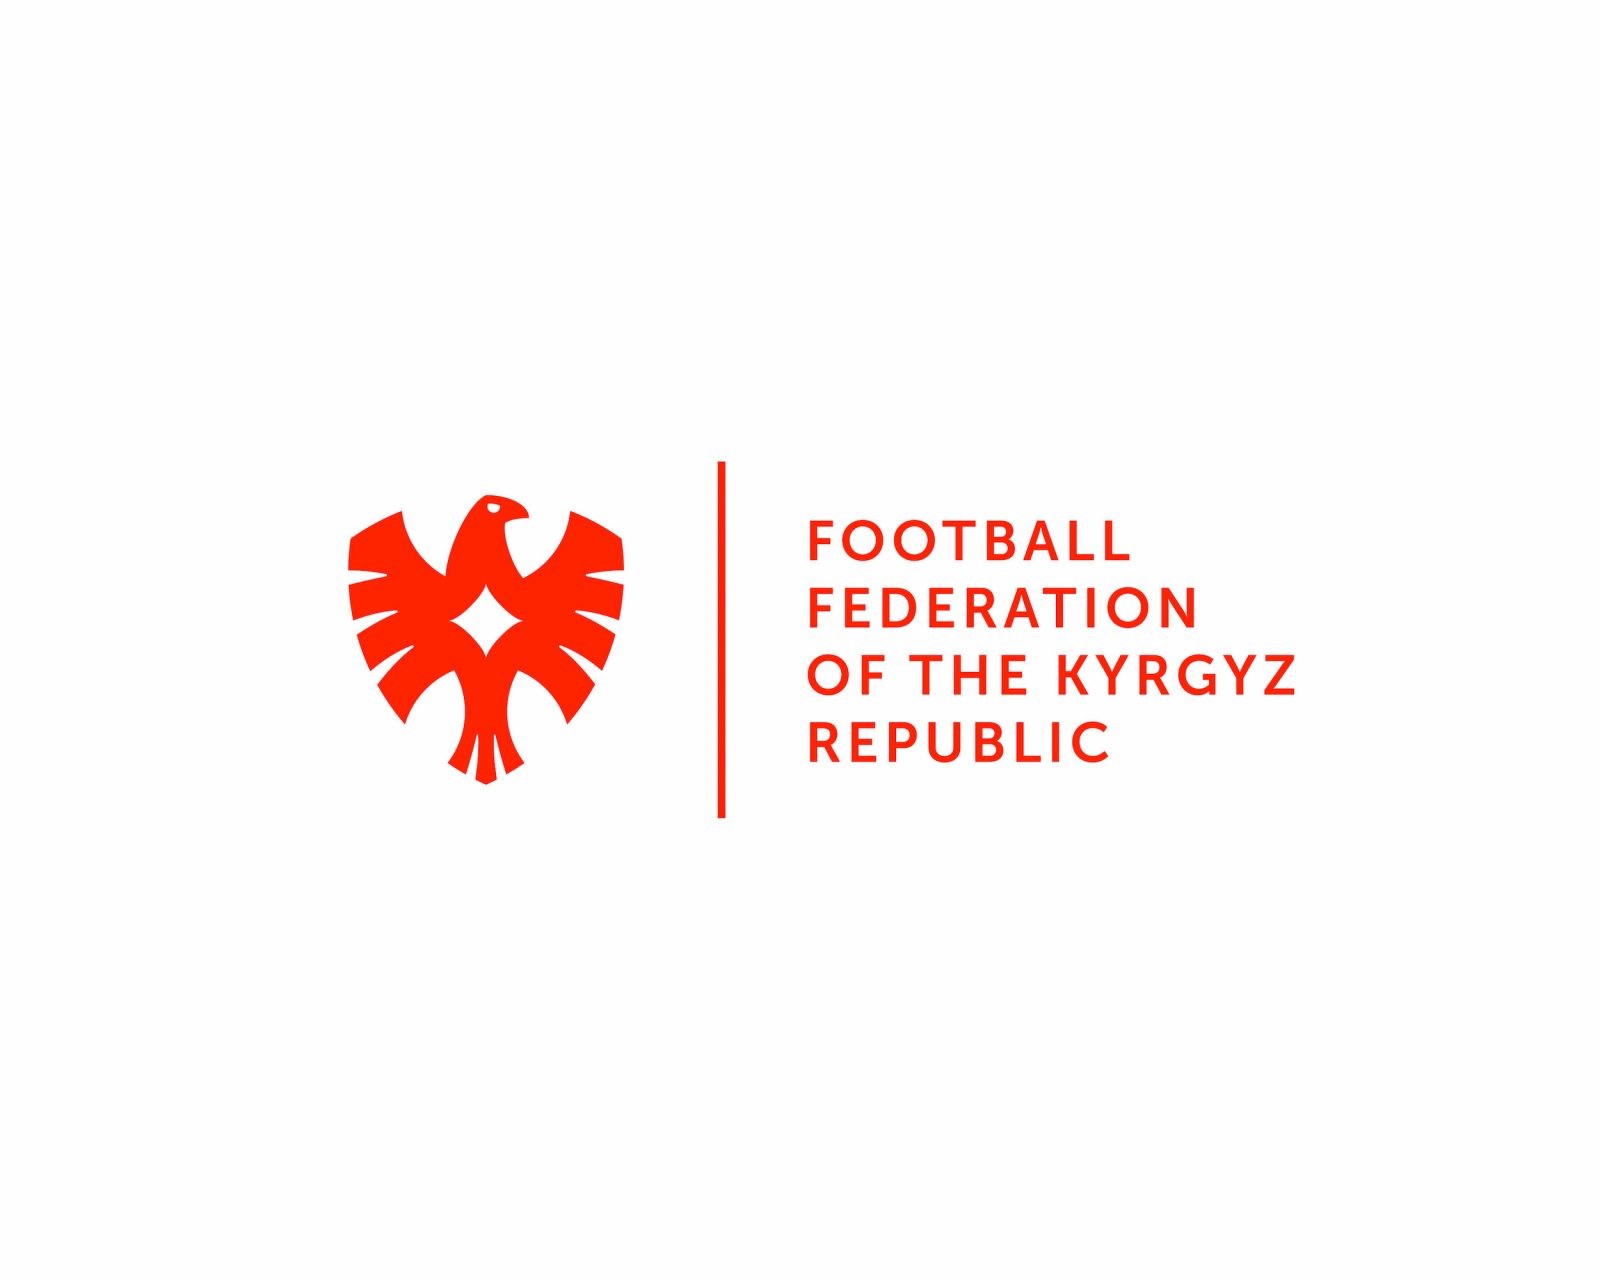 Rebranding Concept for the Football Federation of the Kyrgyz Republic